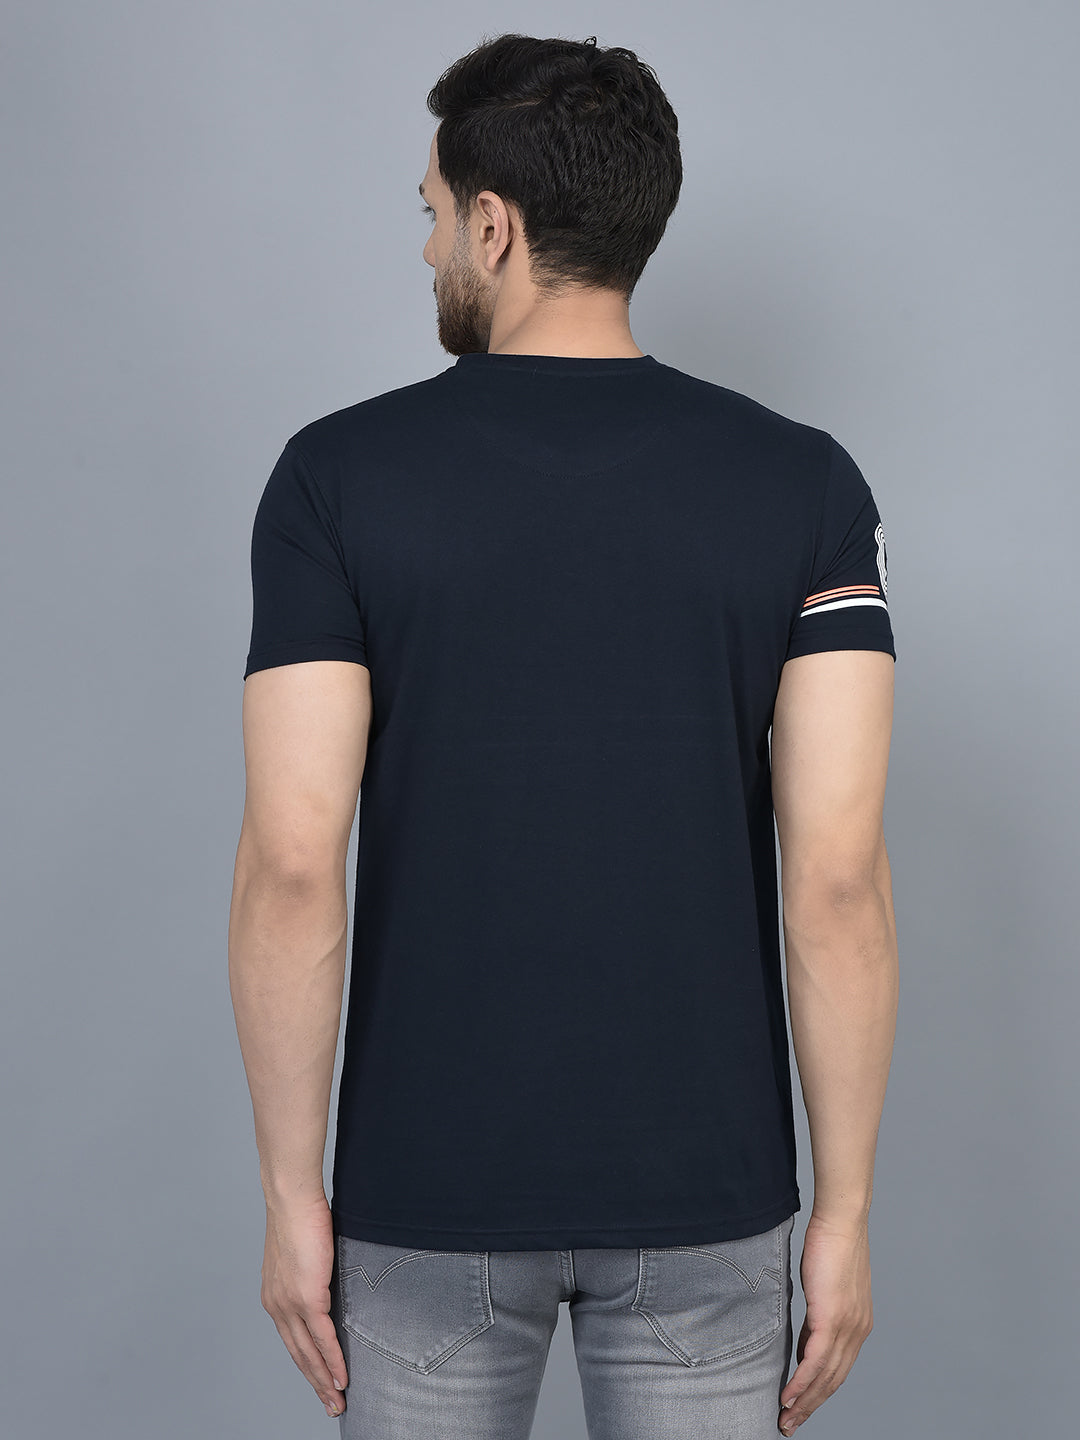 Cobb Navy Blue Printed Round Neck T-Shirt